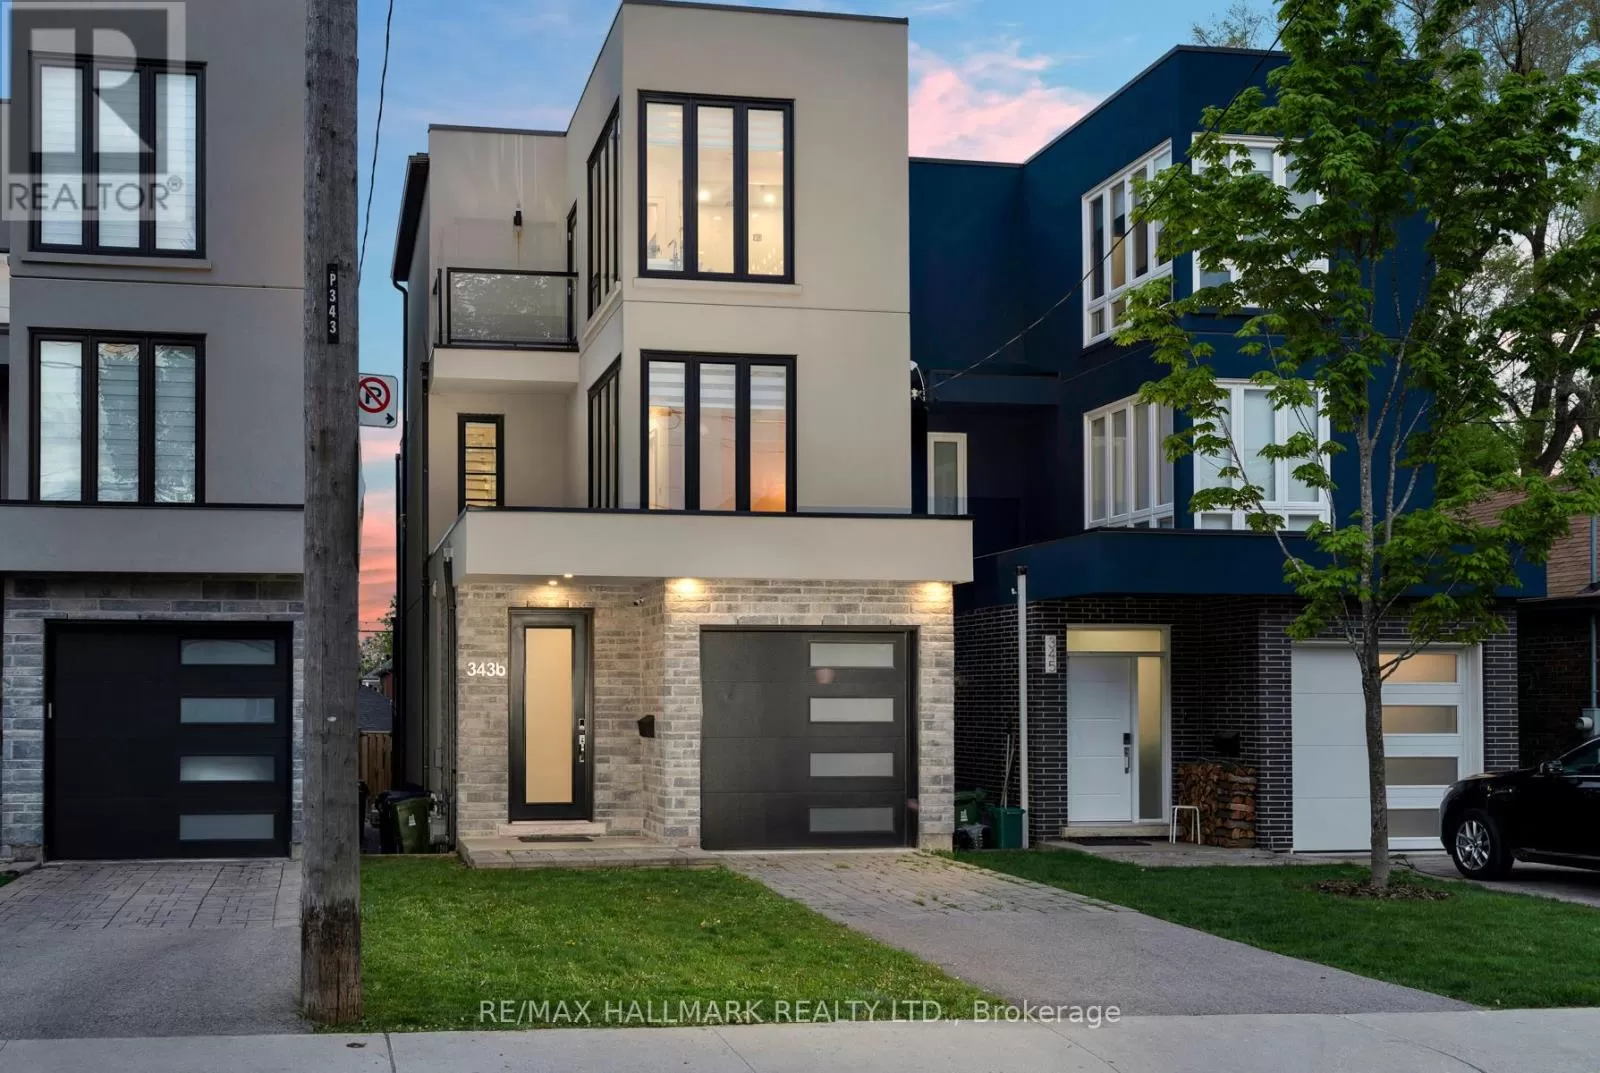 House for rent: 343b Hopewell Avenue, Toronto, Ontario M6E 2S1